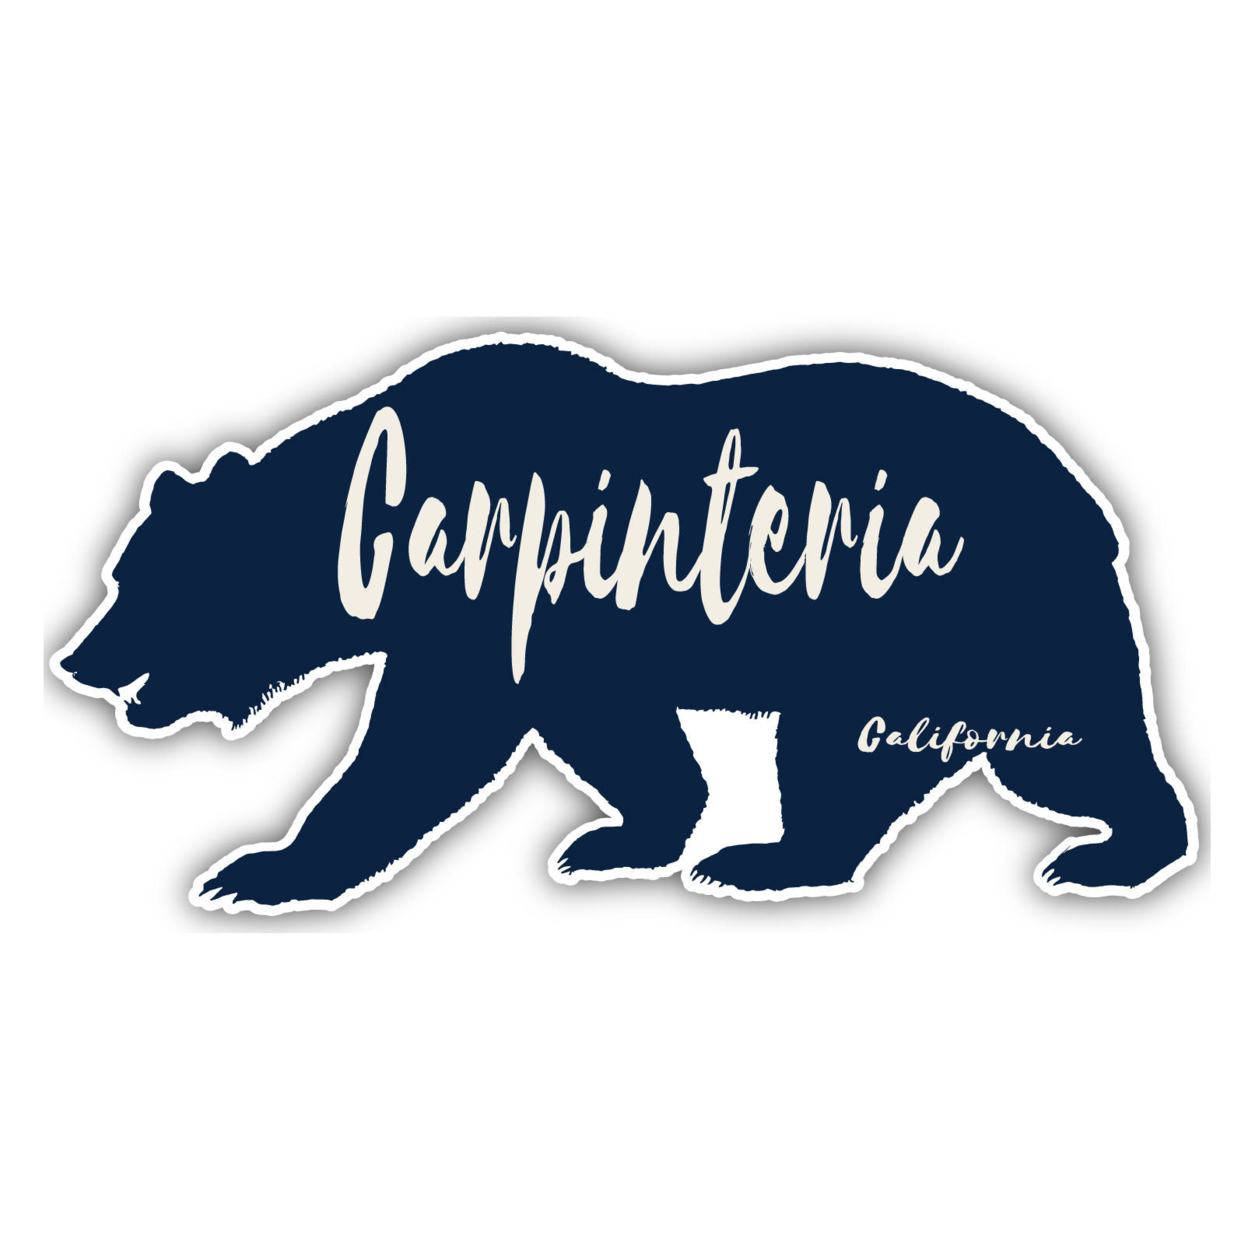 Carpinteria California Souvenir Decorative Stickers (Choose Theme And Size) - Single Unit, 6-Inch, Bear